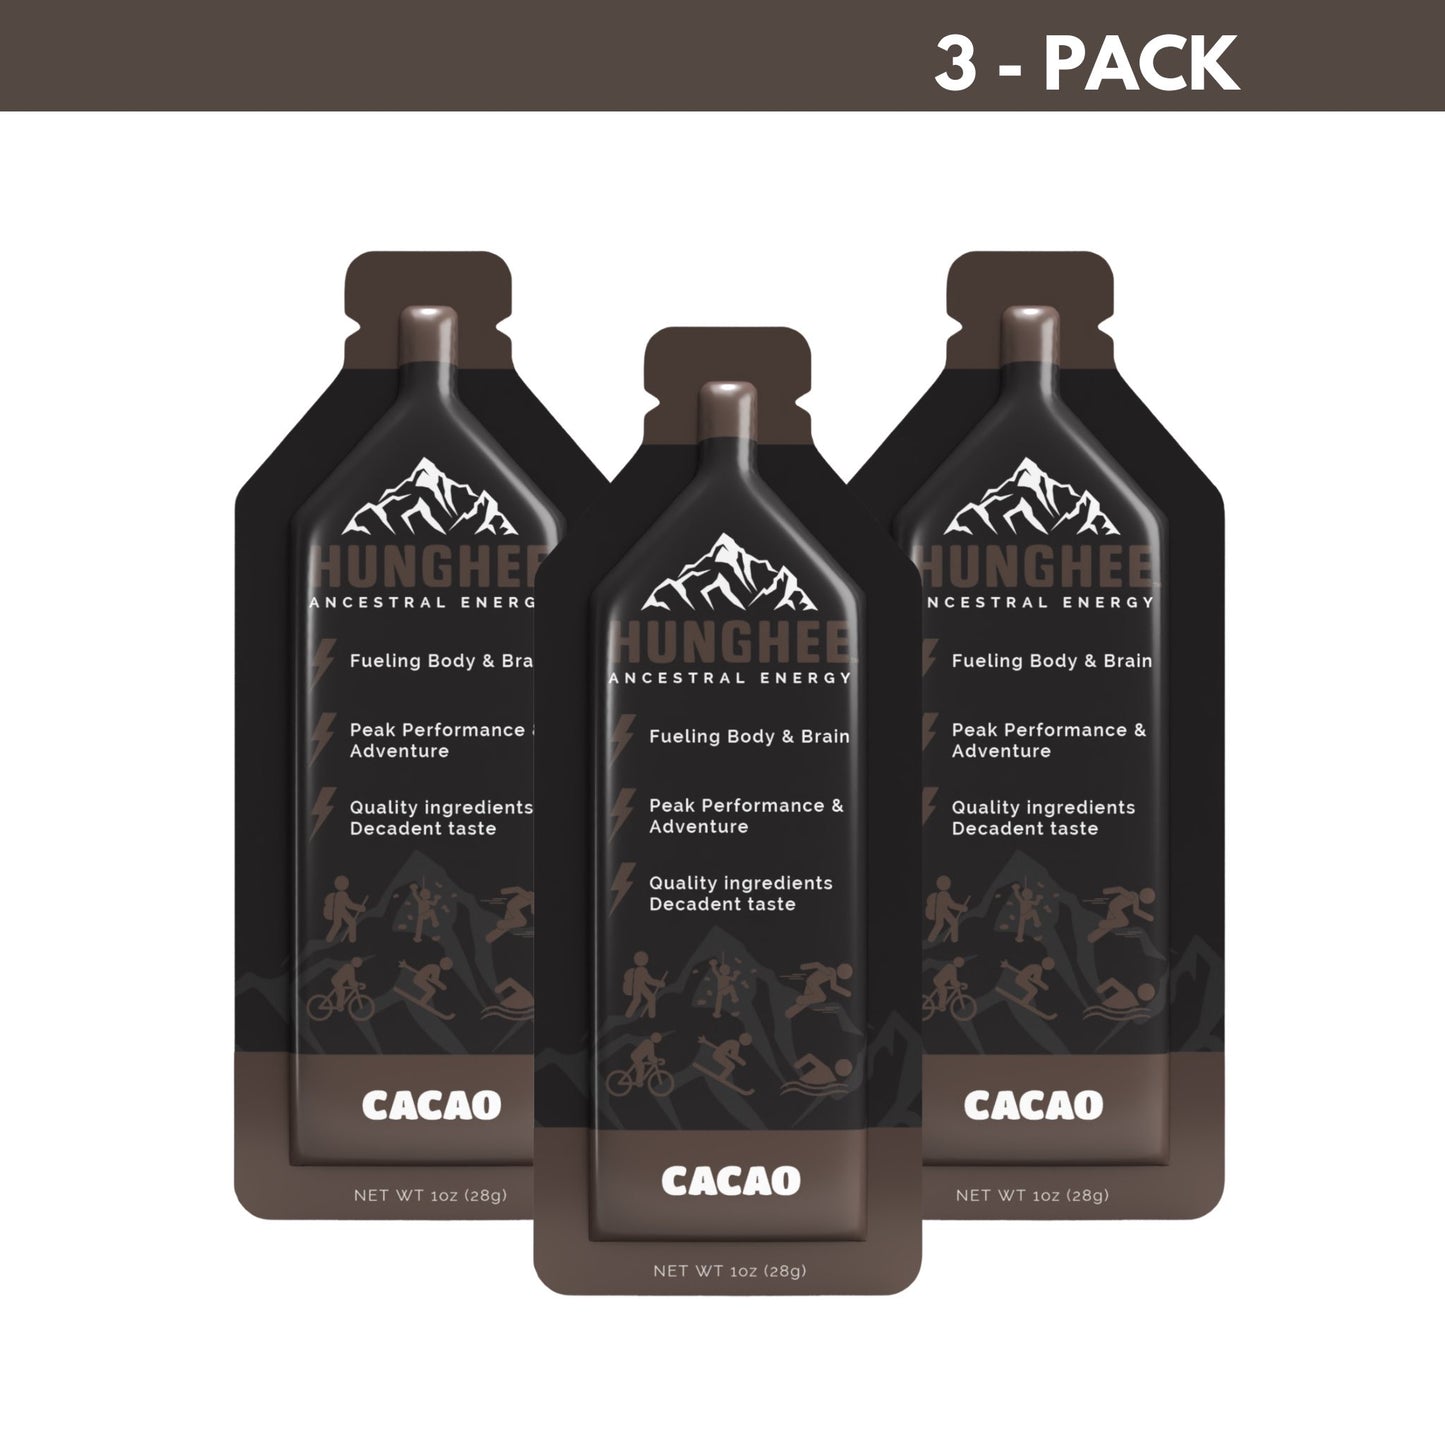 Cacao 3 Pack Hunghee Ancestral Energy Salt Lake City, Utah. Best Carnivore Energy Gel for Sport Nutrition, Ghee, Honey, Sea Salt